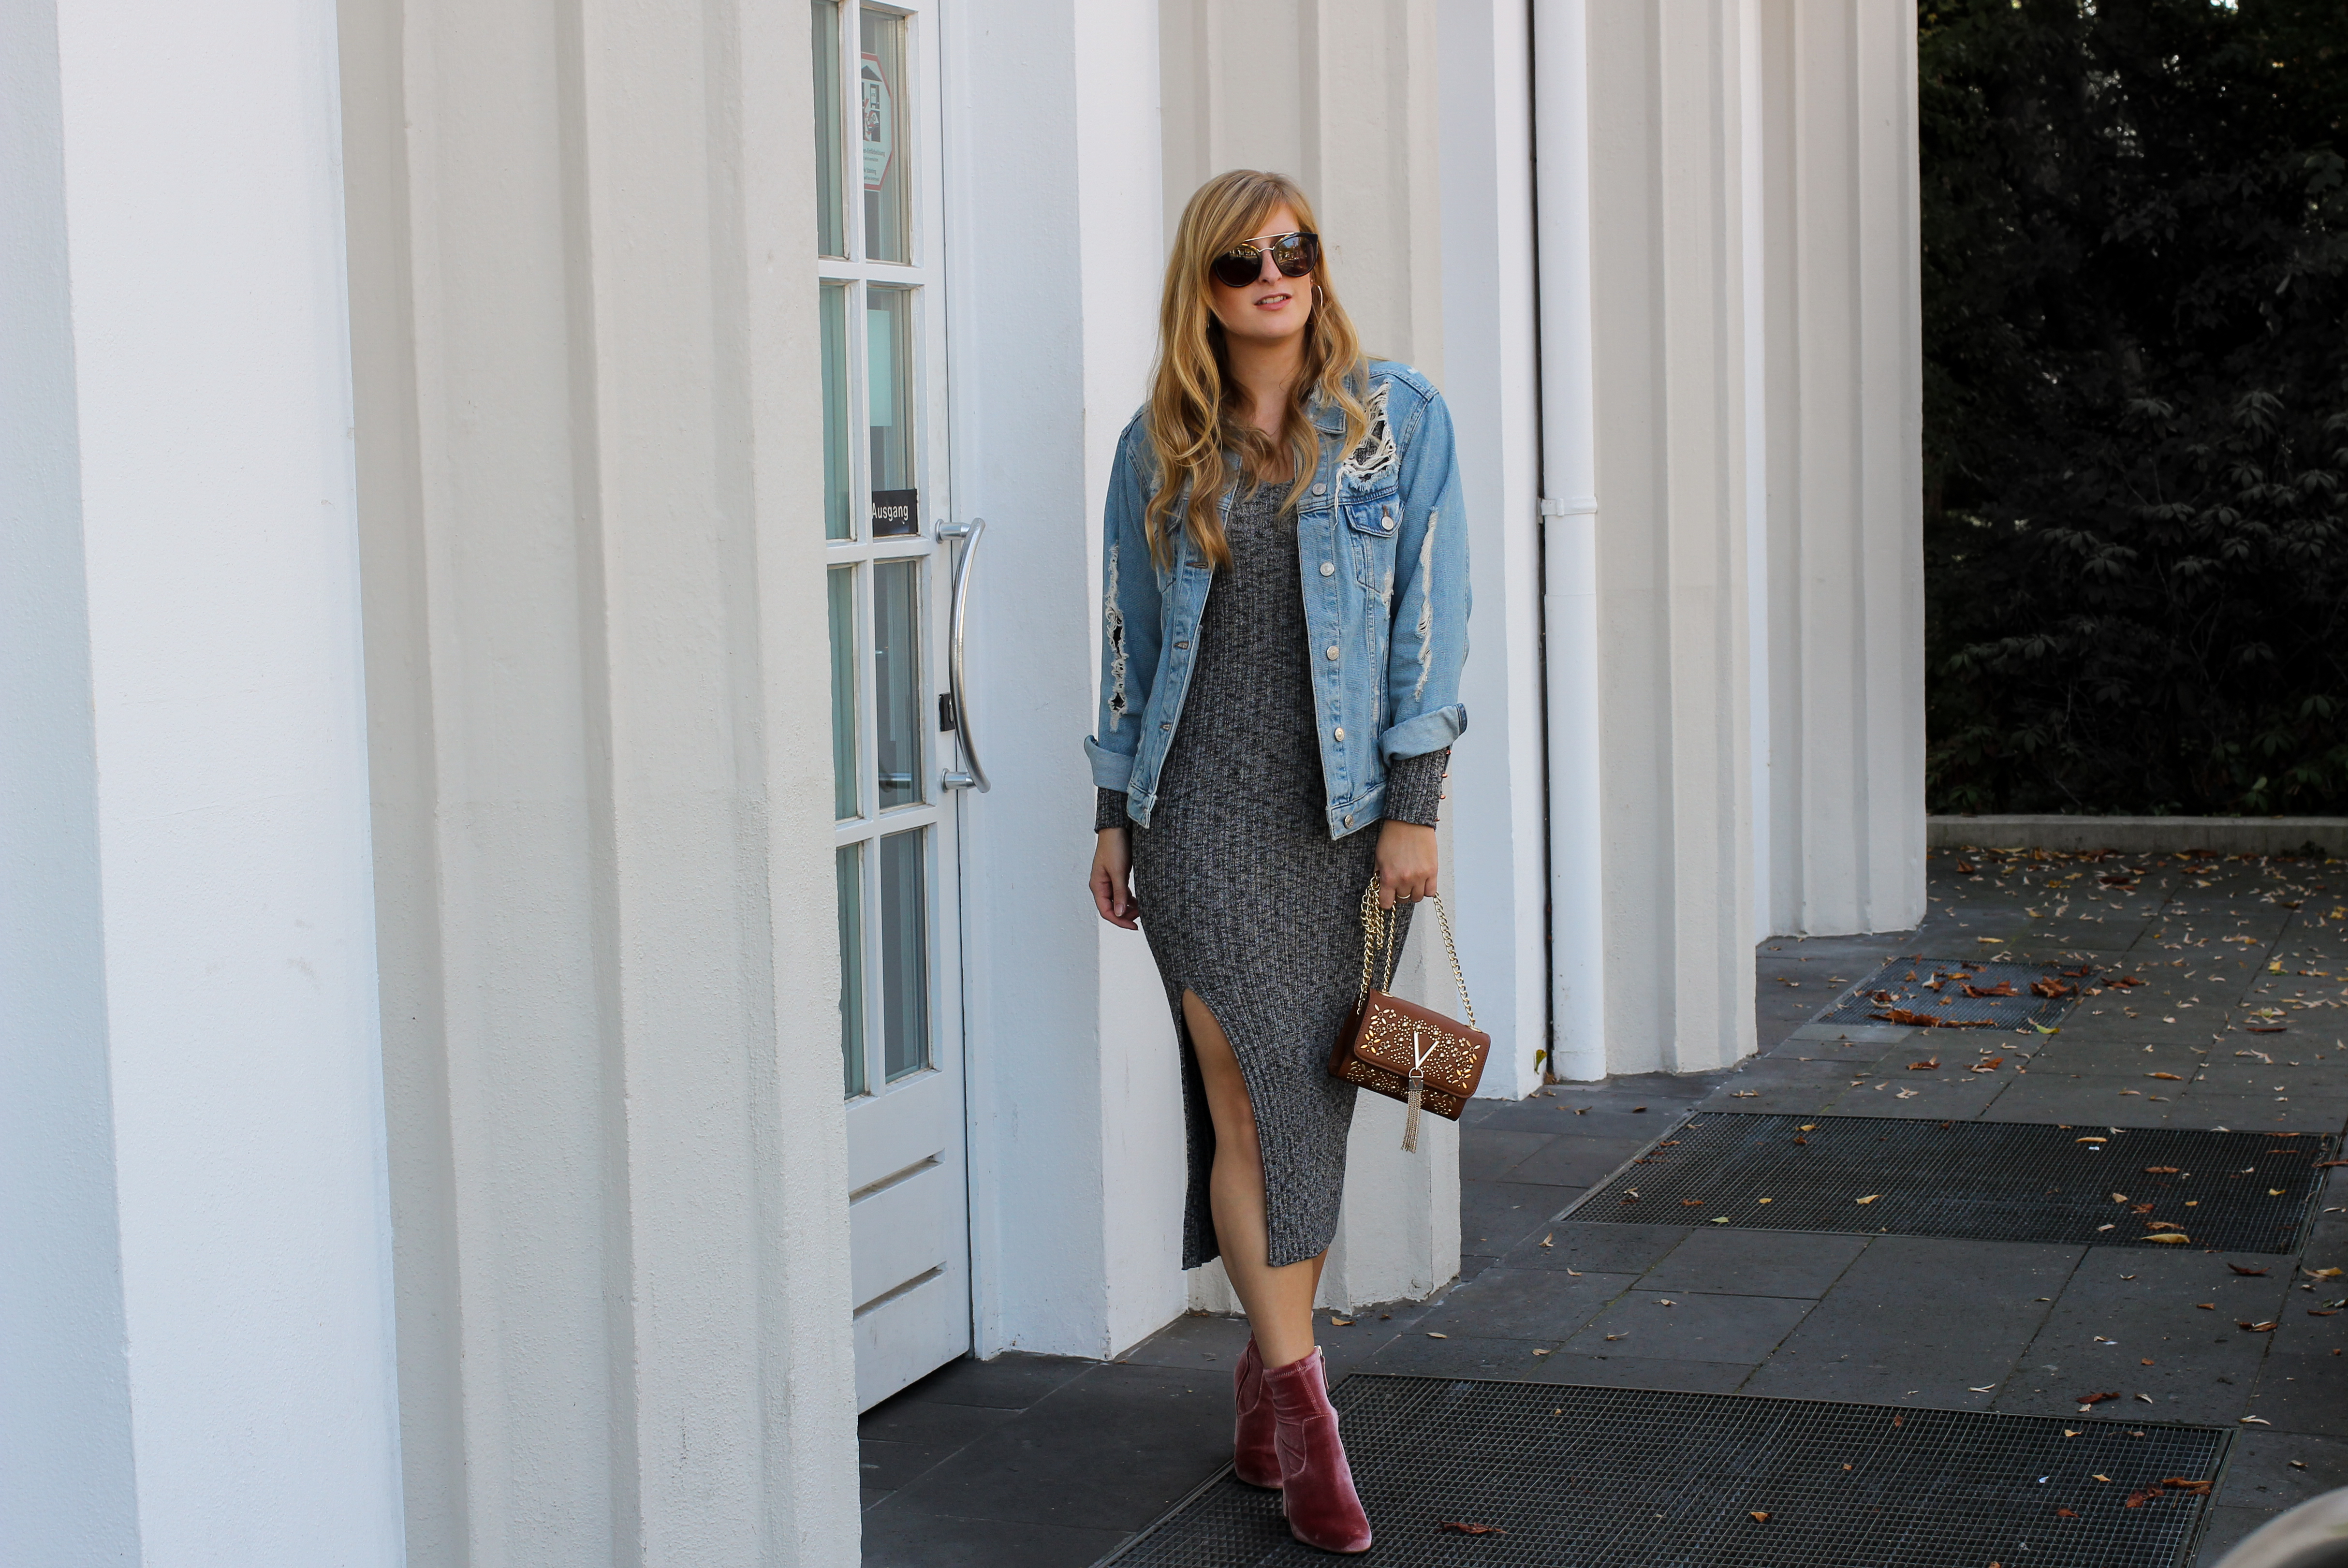 Herbstfavorit Wollkleid grau kombinieren Outfit rosa samt Heels Stiefeletten Jeansjacke Valentino Handbags Fashion Blog Bonn Herbstoutfit 7